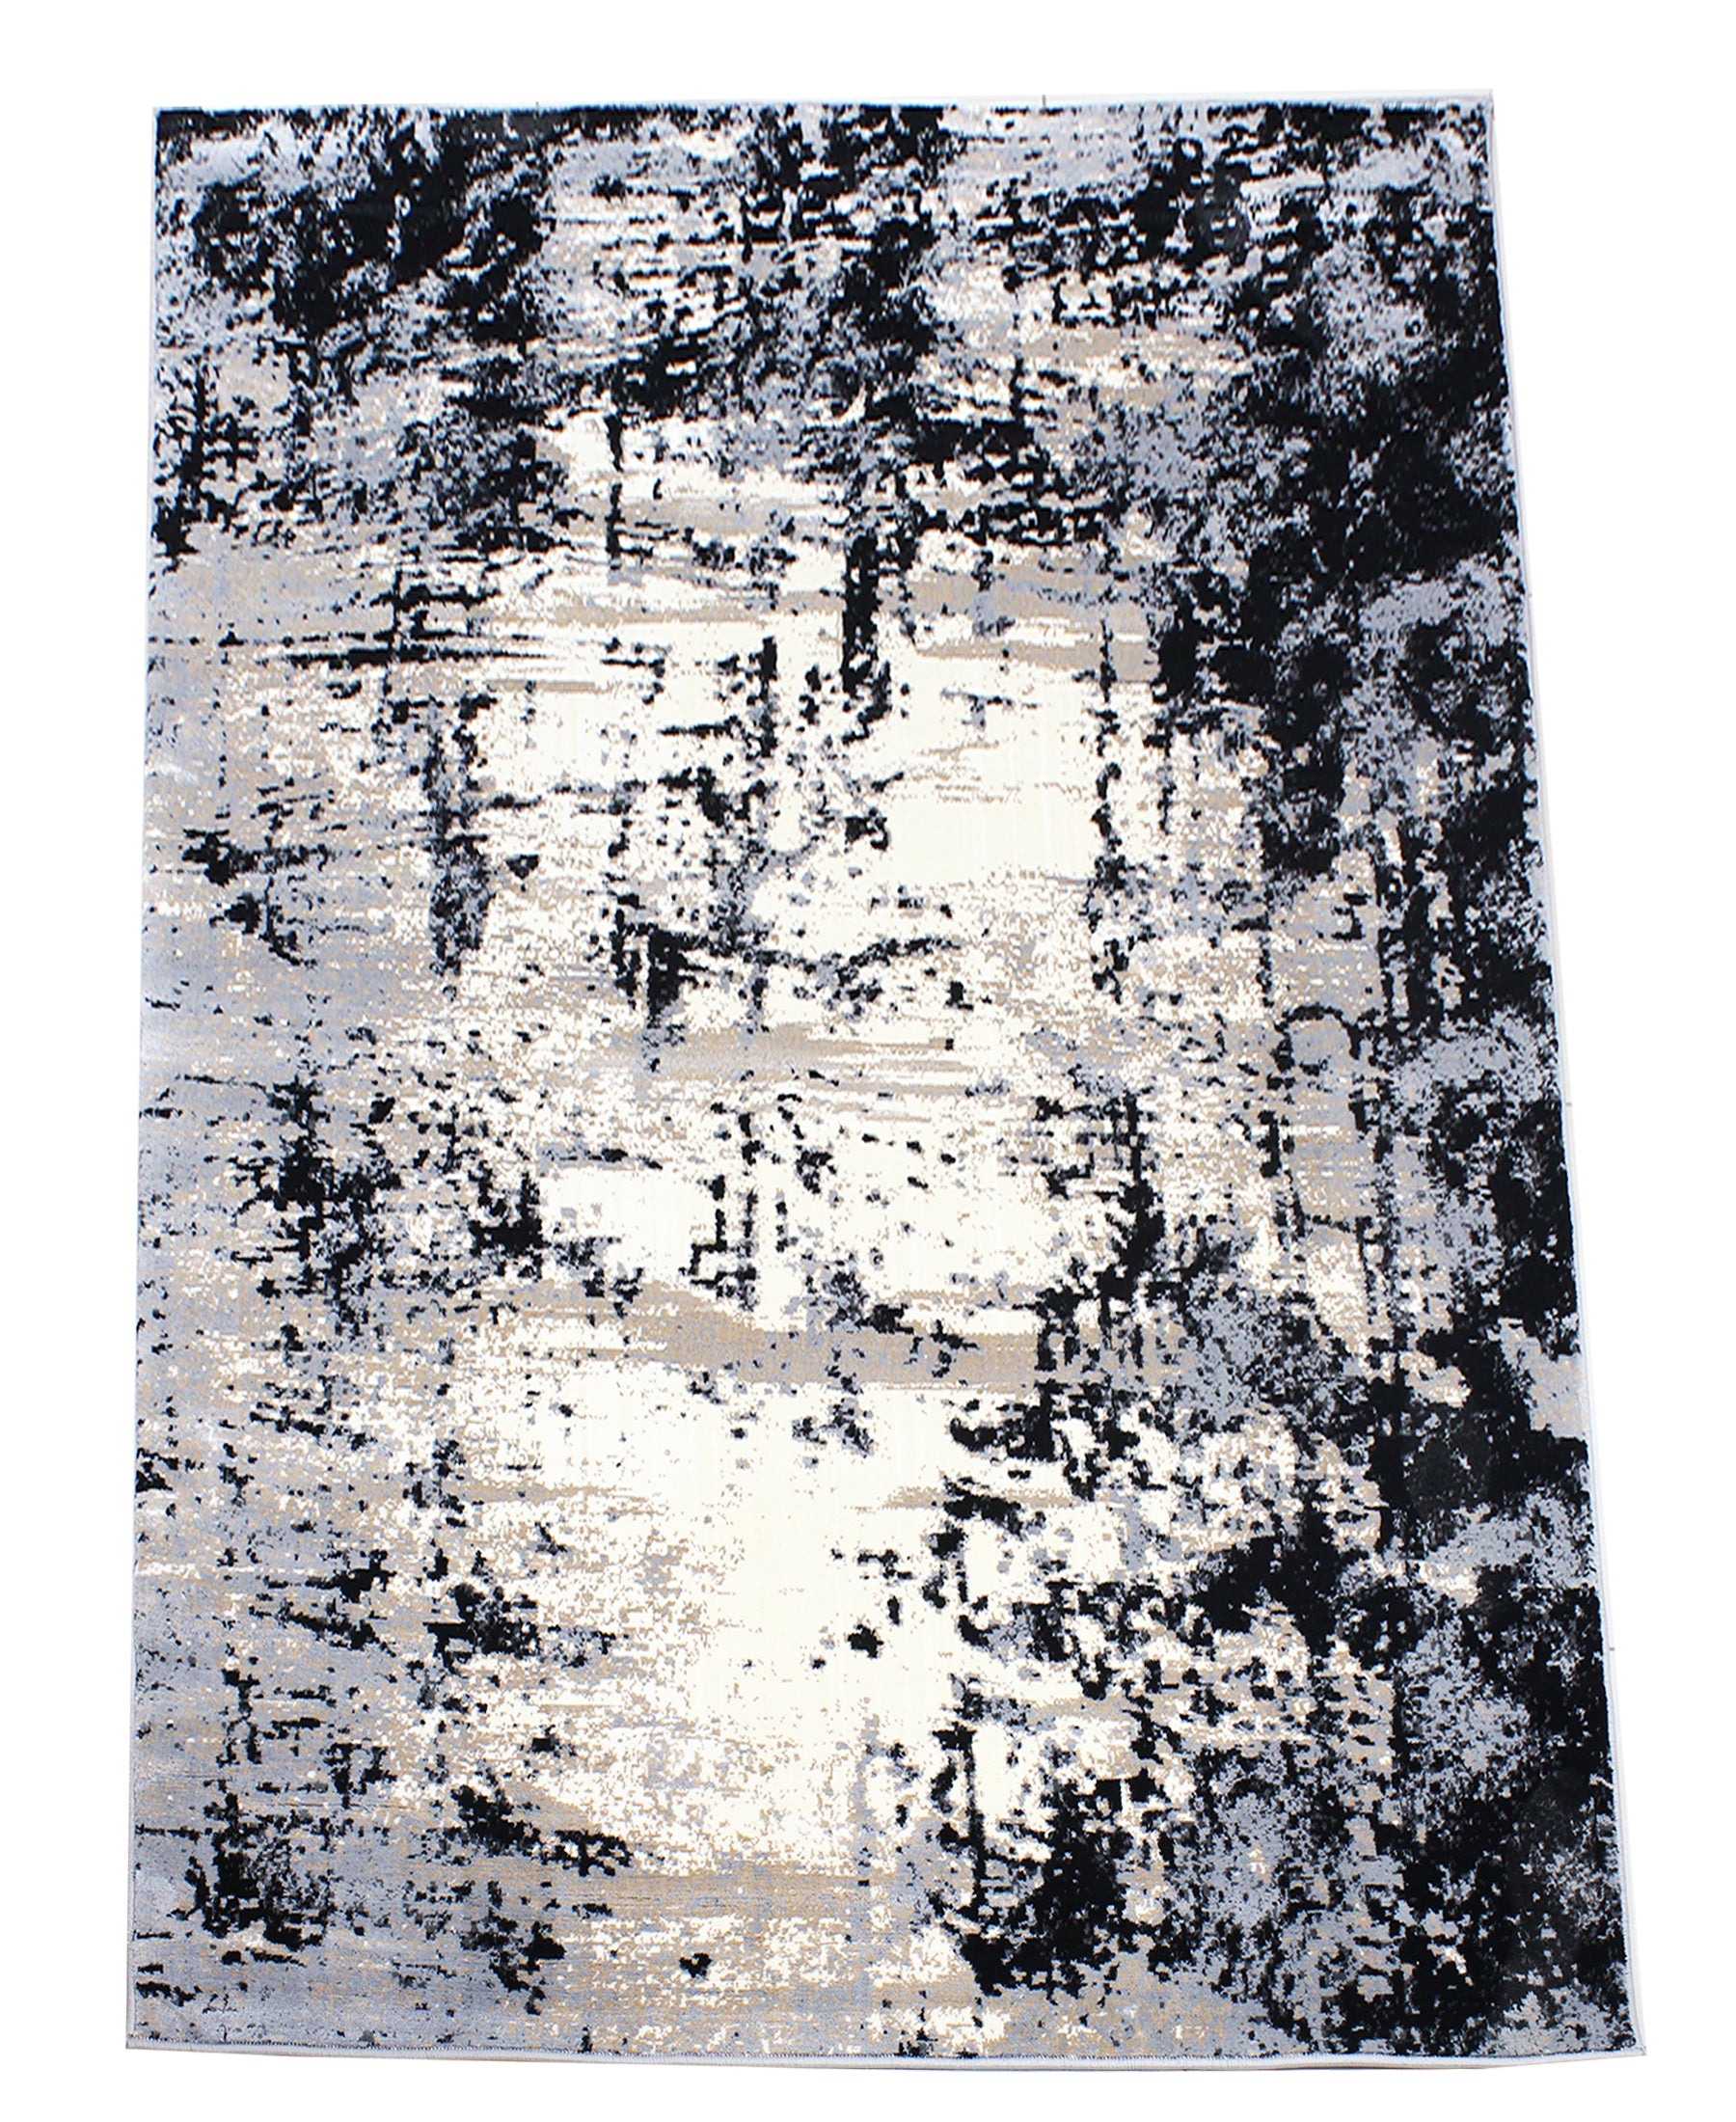 Damascus Shady Carpet 800mm x 2000mm - Black & Grey